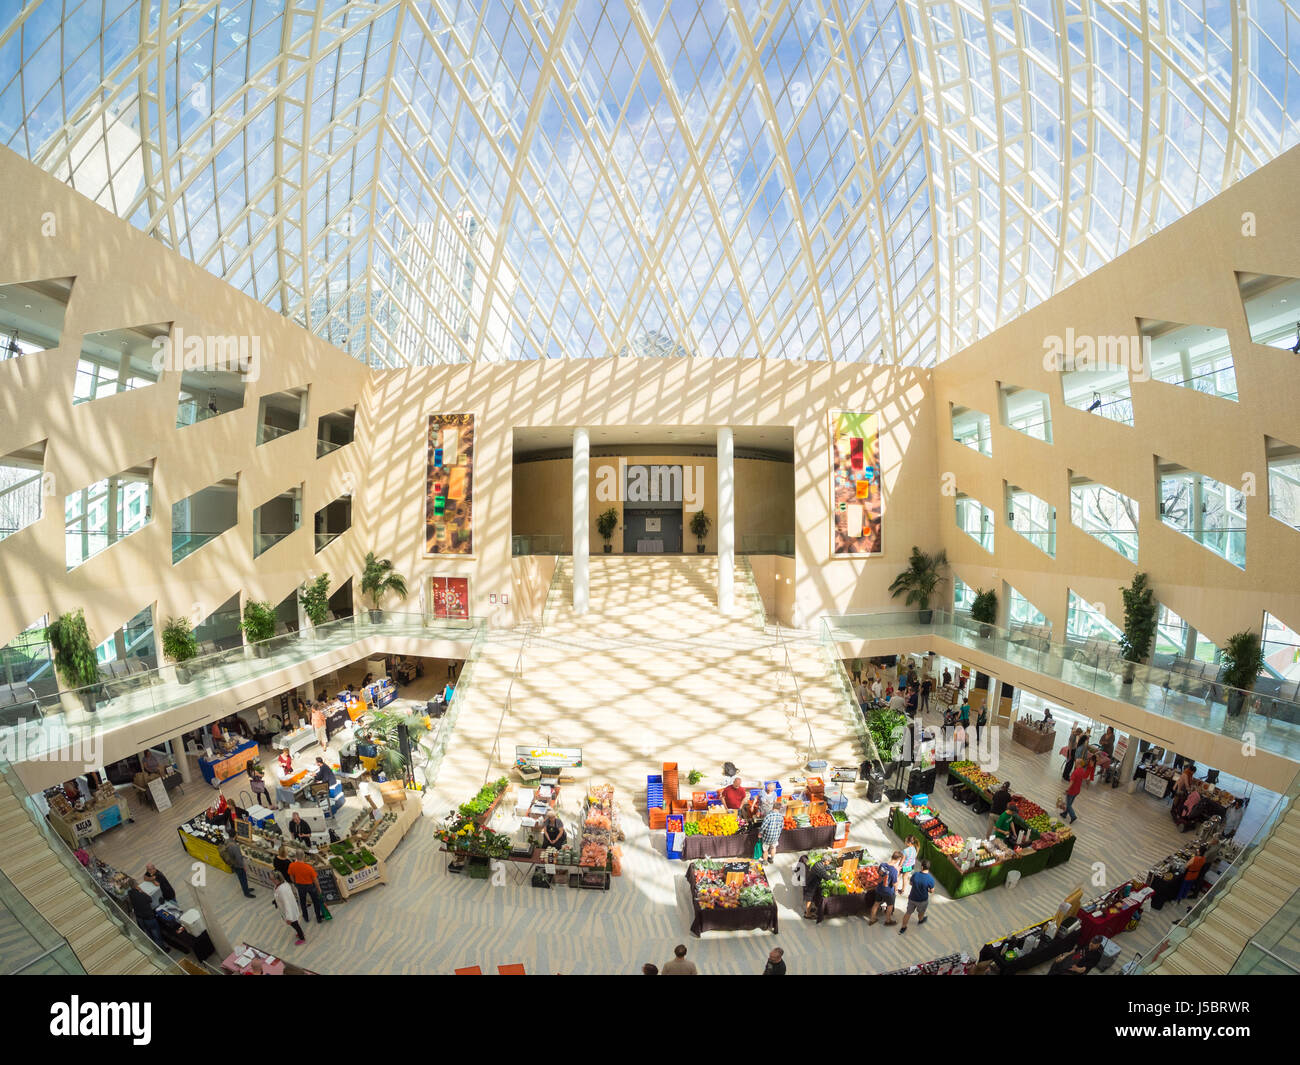 A wide angle, fish-eye view of the City Market (City Farmers' Market) and atrium interior of Edmonton City Hall in Edmonton, Alberta, Canada. Stock Photo